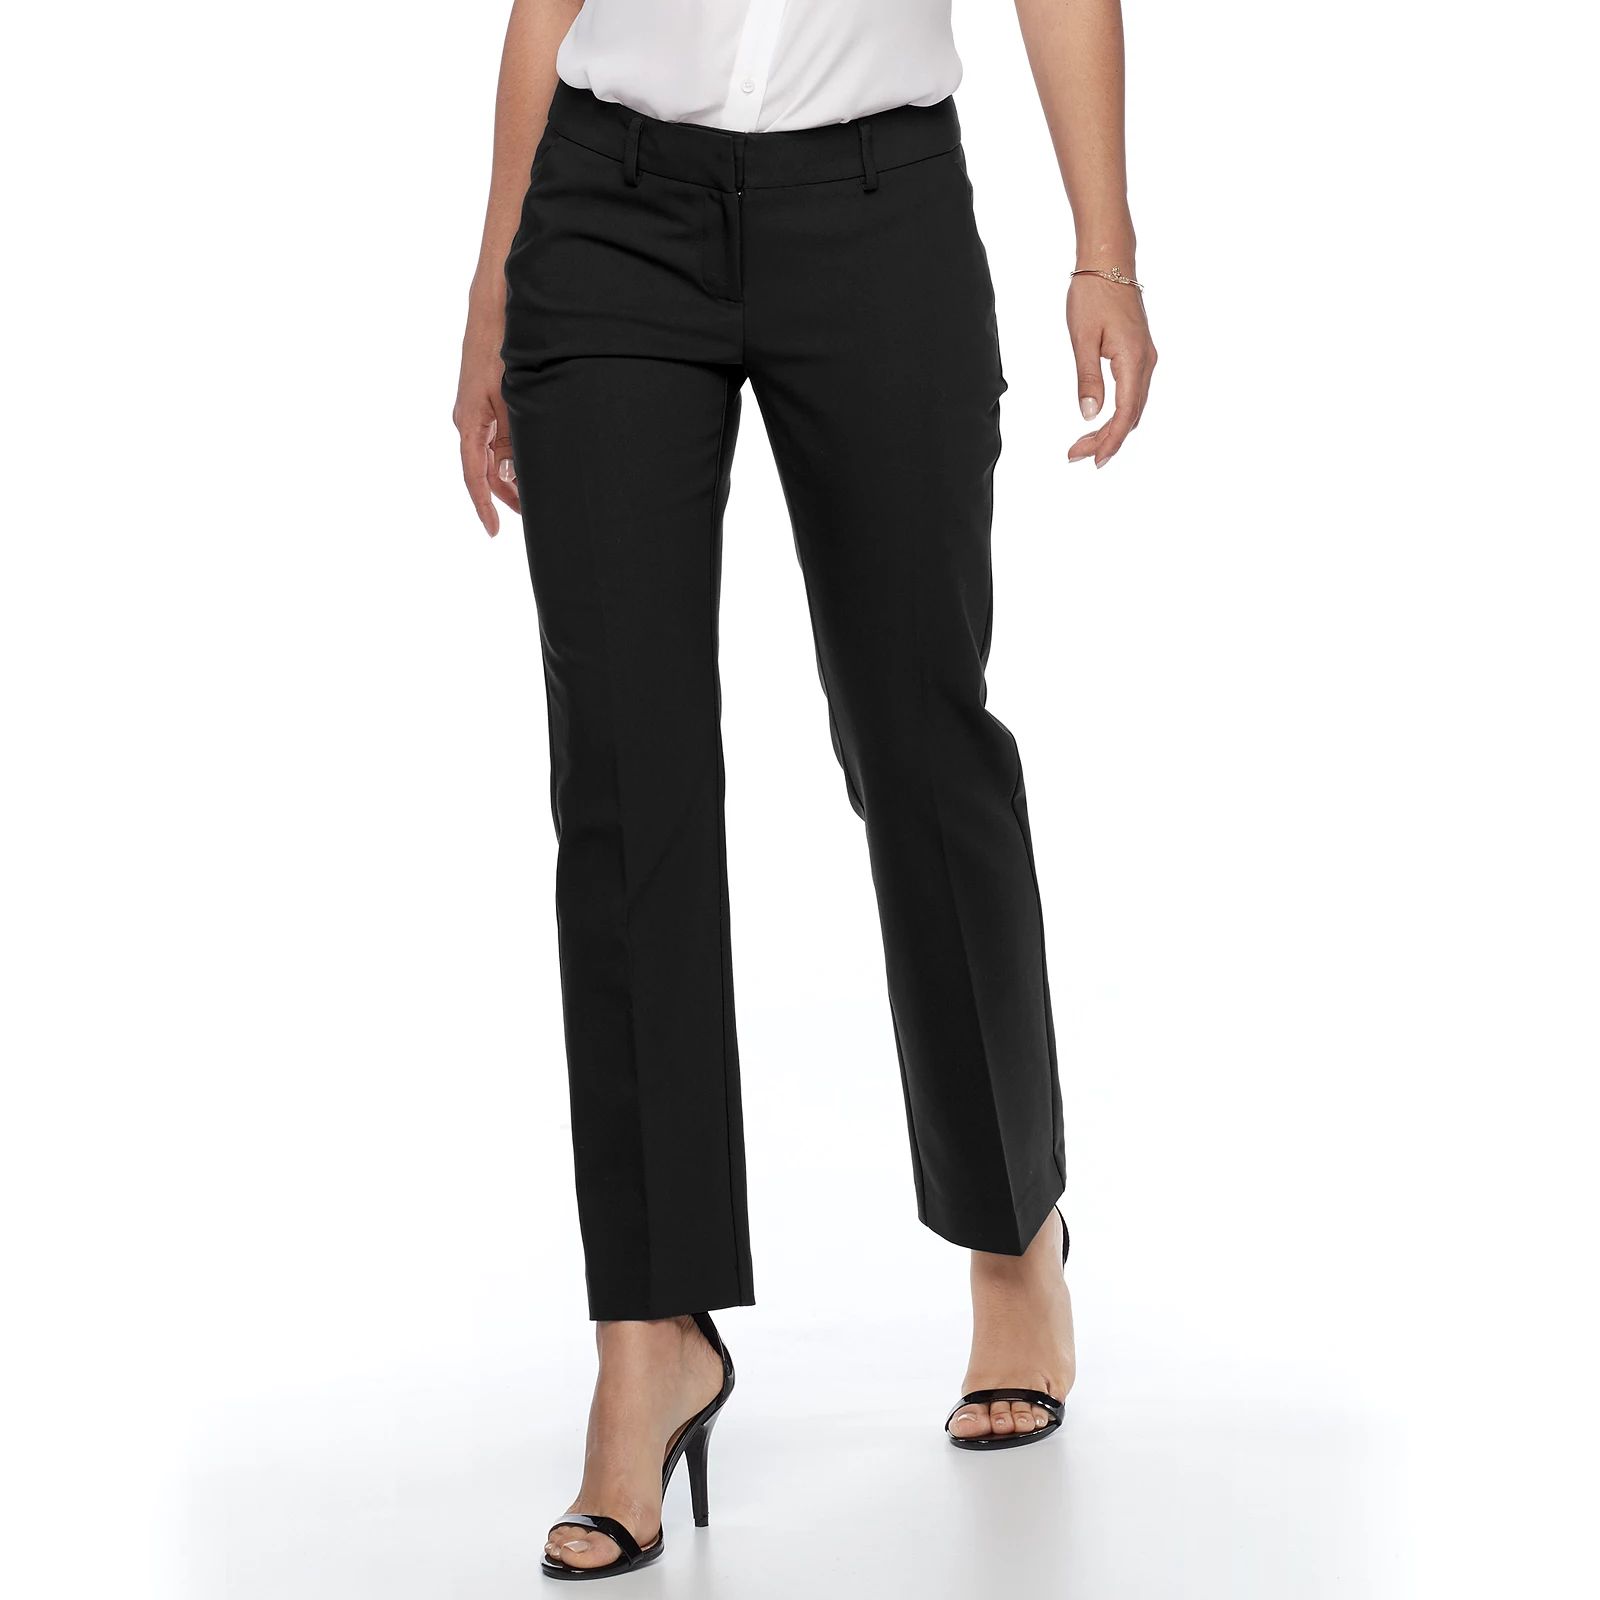 Petite Apt. 9 Torie Modern Fit Straight-Leg Dress Pants, Women's, Size: 14P-Short, Black | Kohl's